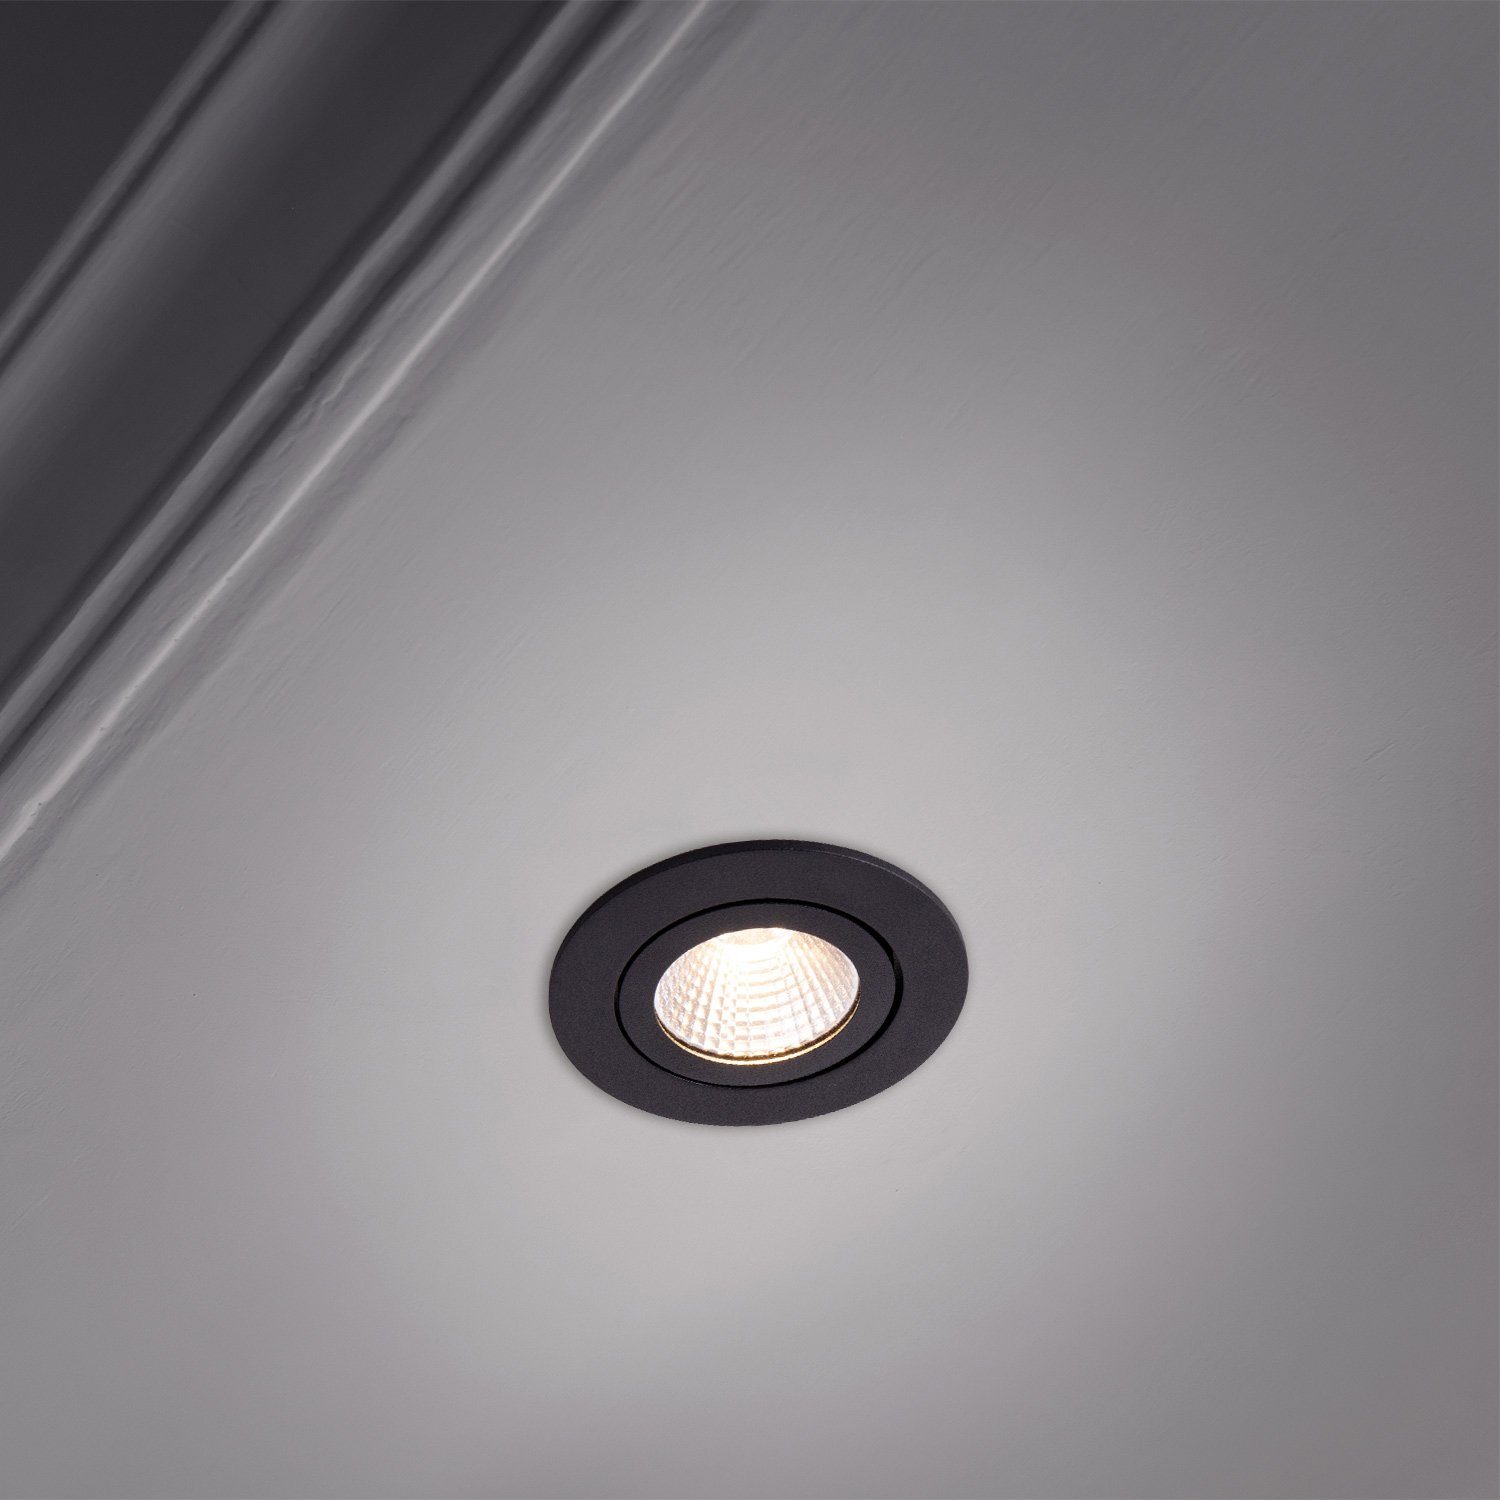 Paco Home Einbauleuchte Rita, LED wechselbar, Einbaustrahler Flach LED Warmweiß, LED Strahler Schwenkbar Spotlight dimmbar